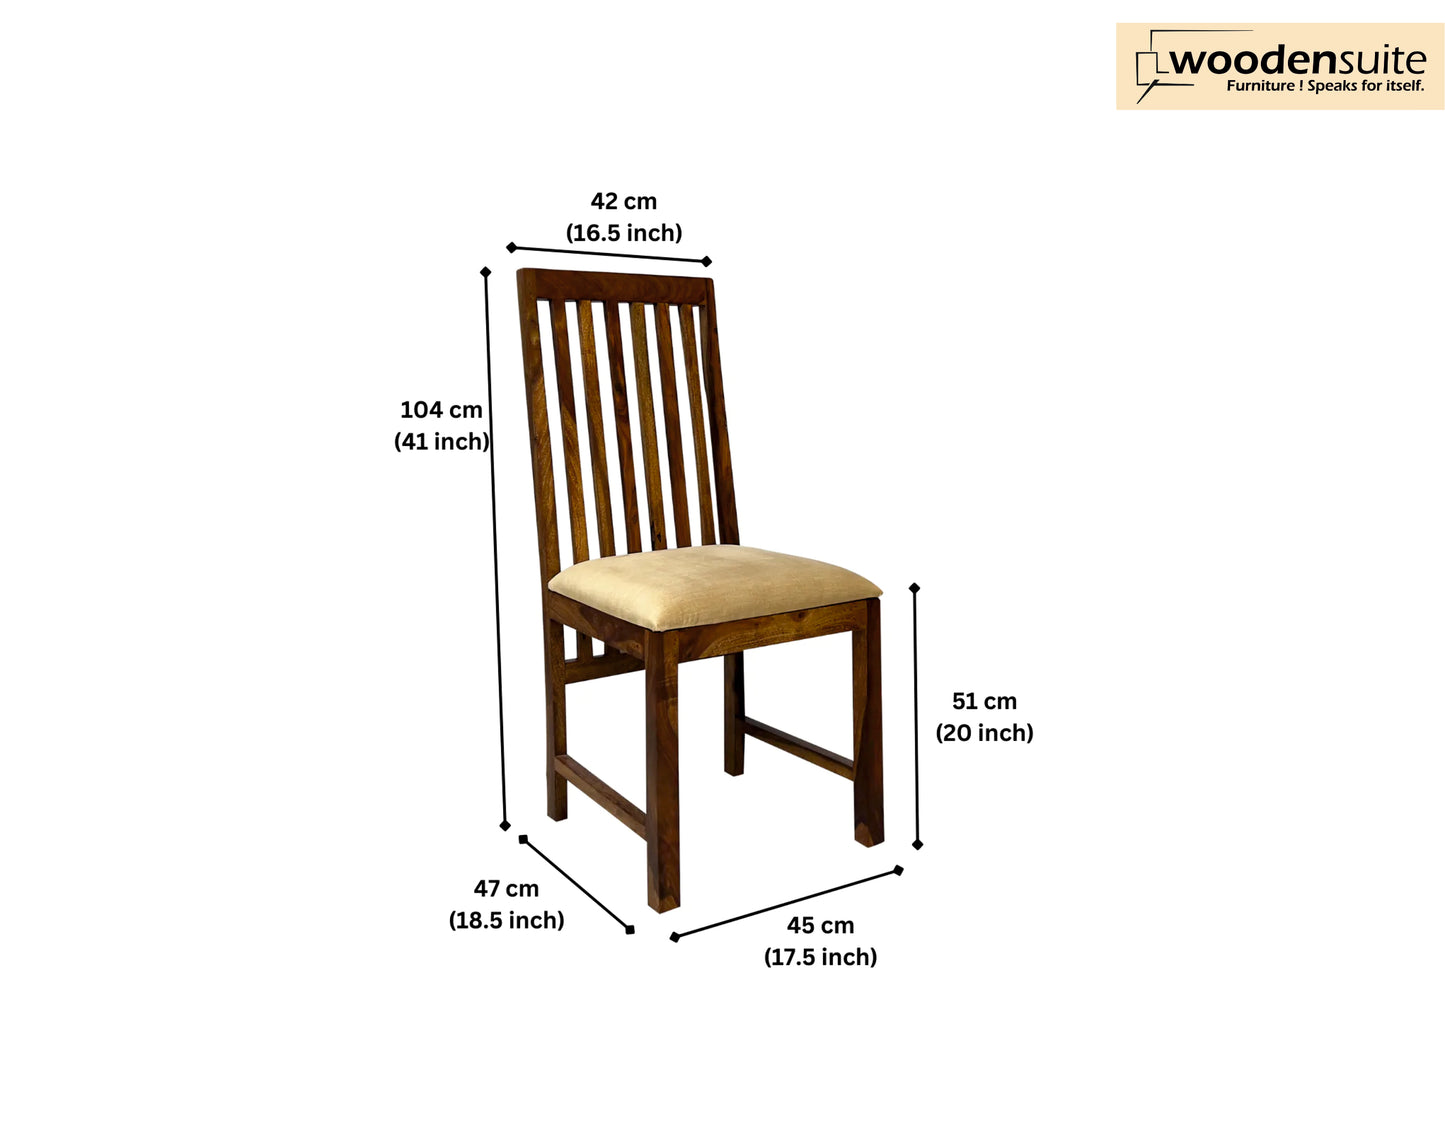 Sheesham Wood Dining Chair LP